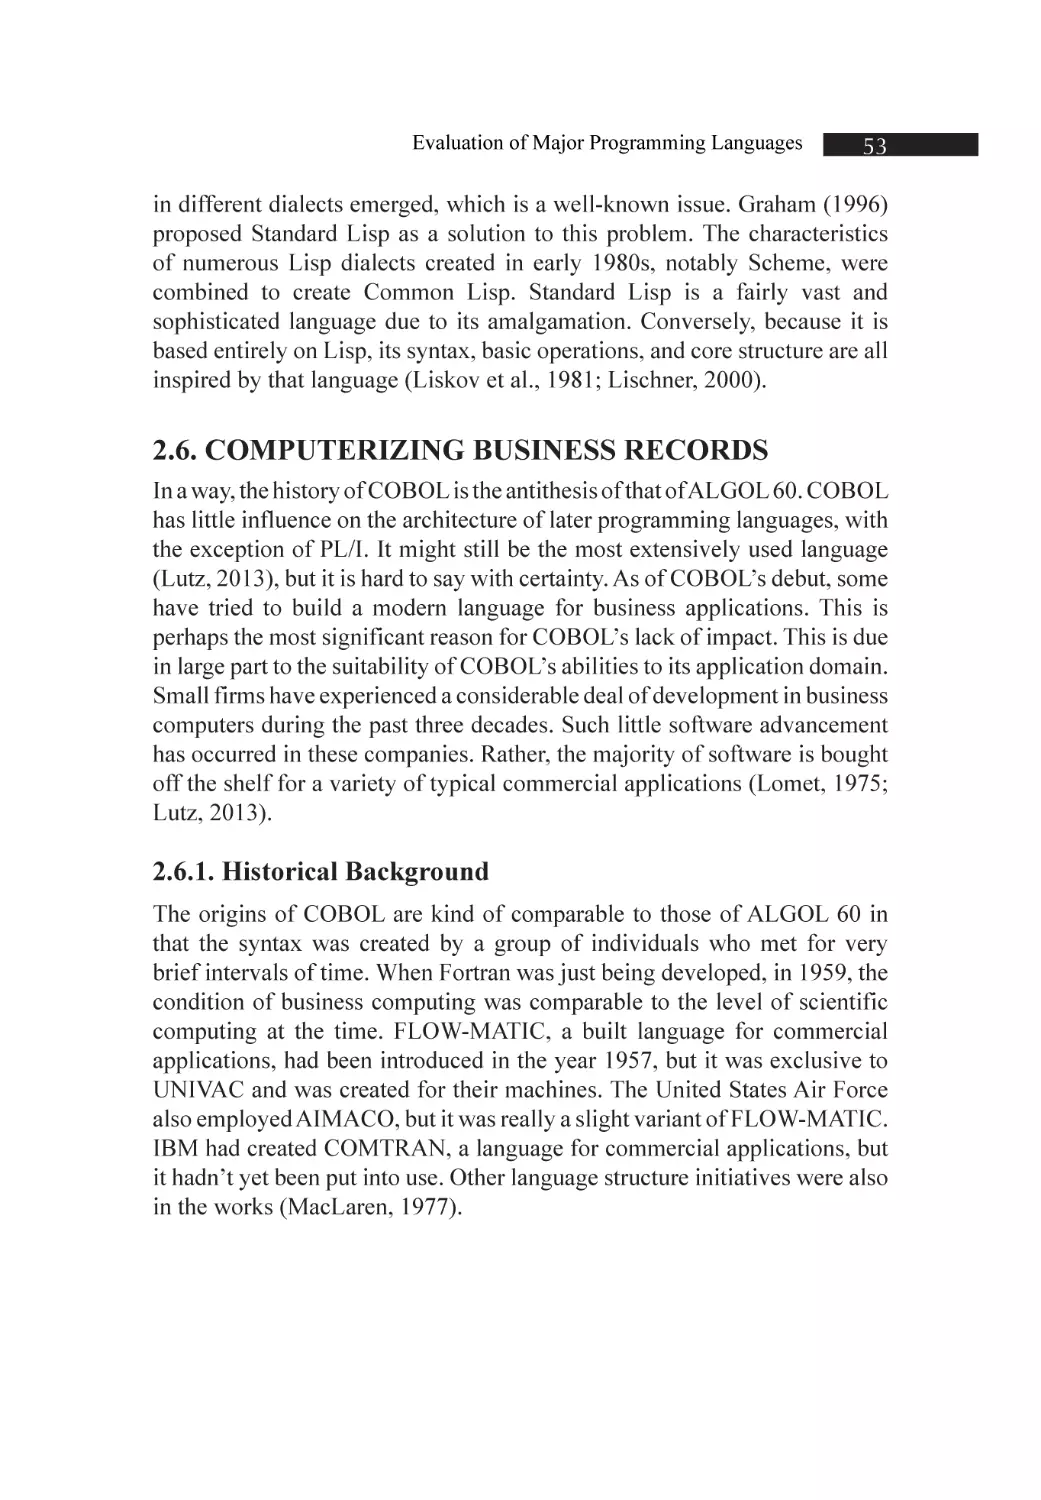 2.6. Computerizing Business Records